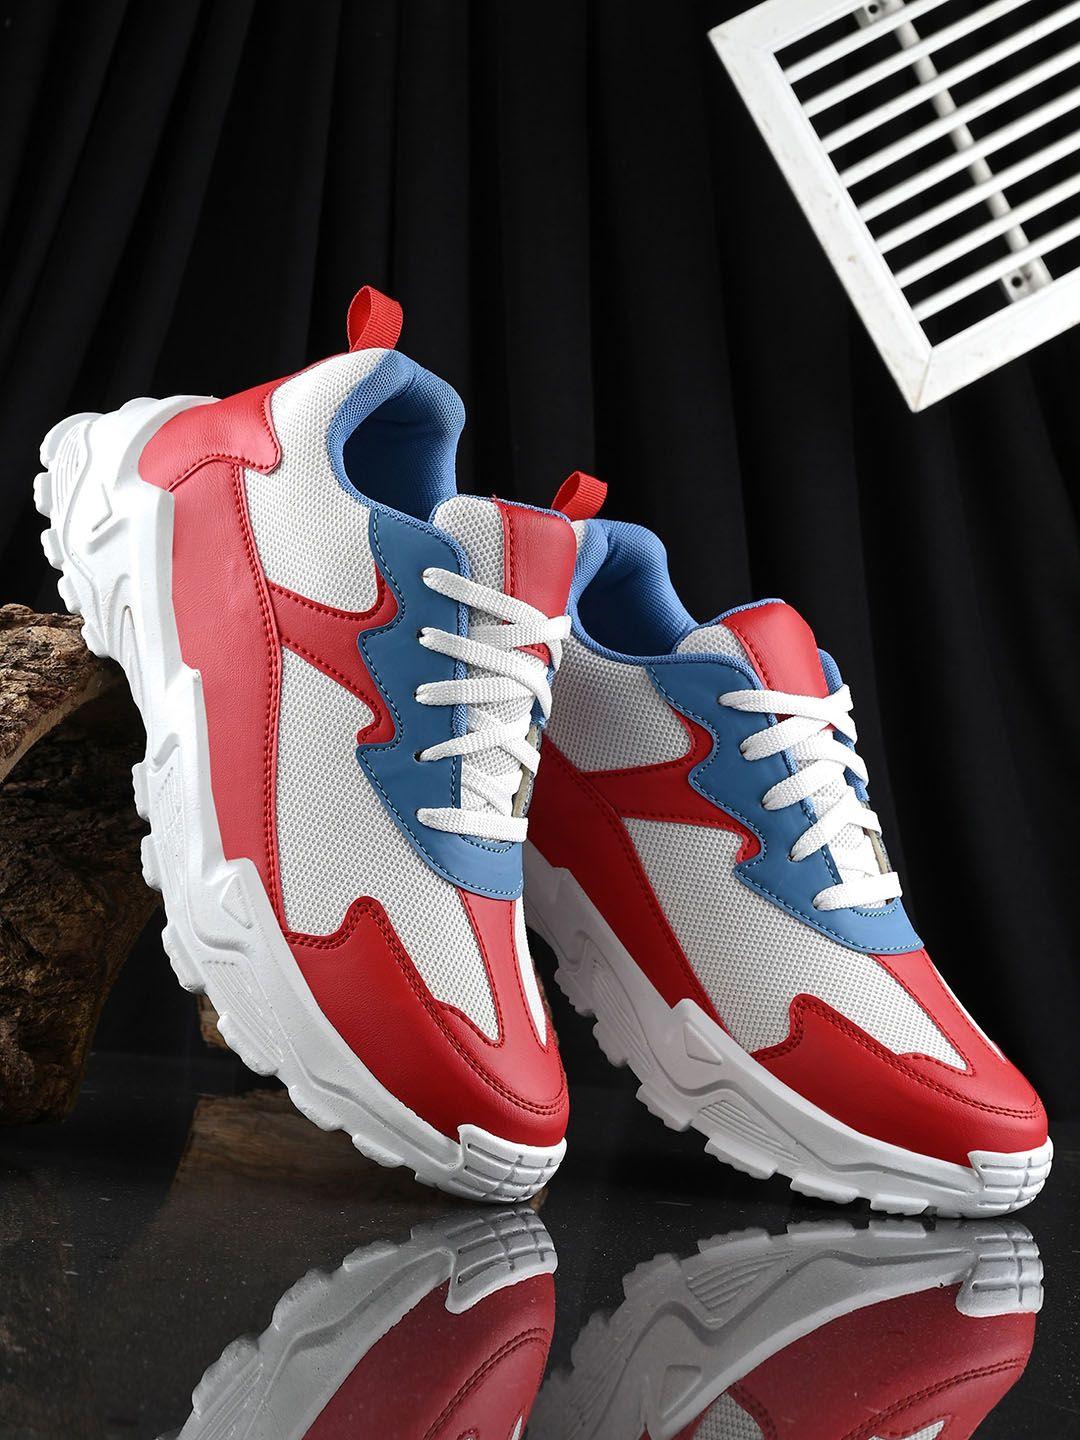 kook n keech men red and blue colourblocked lightweight sneakers